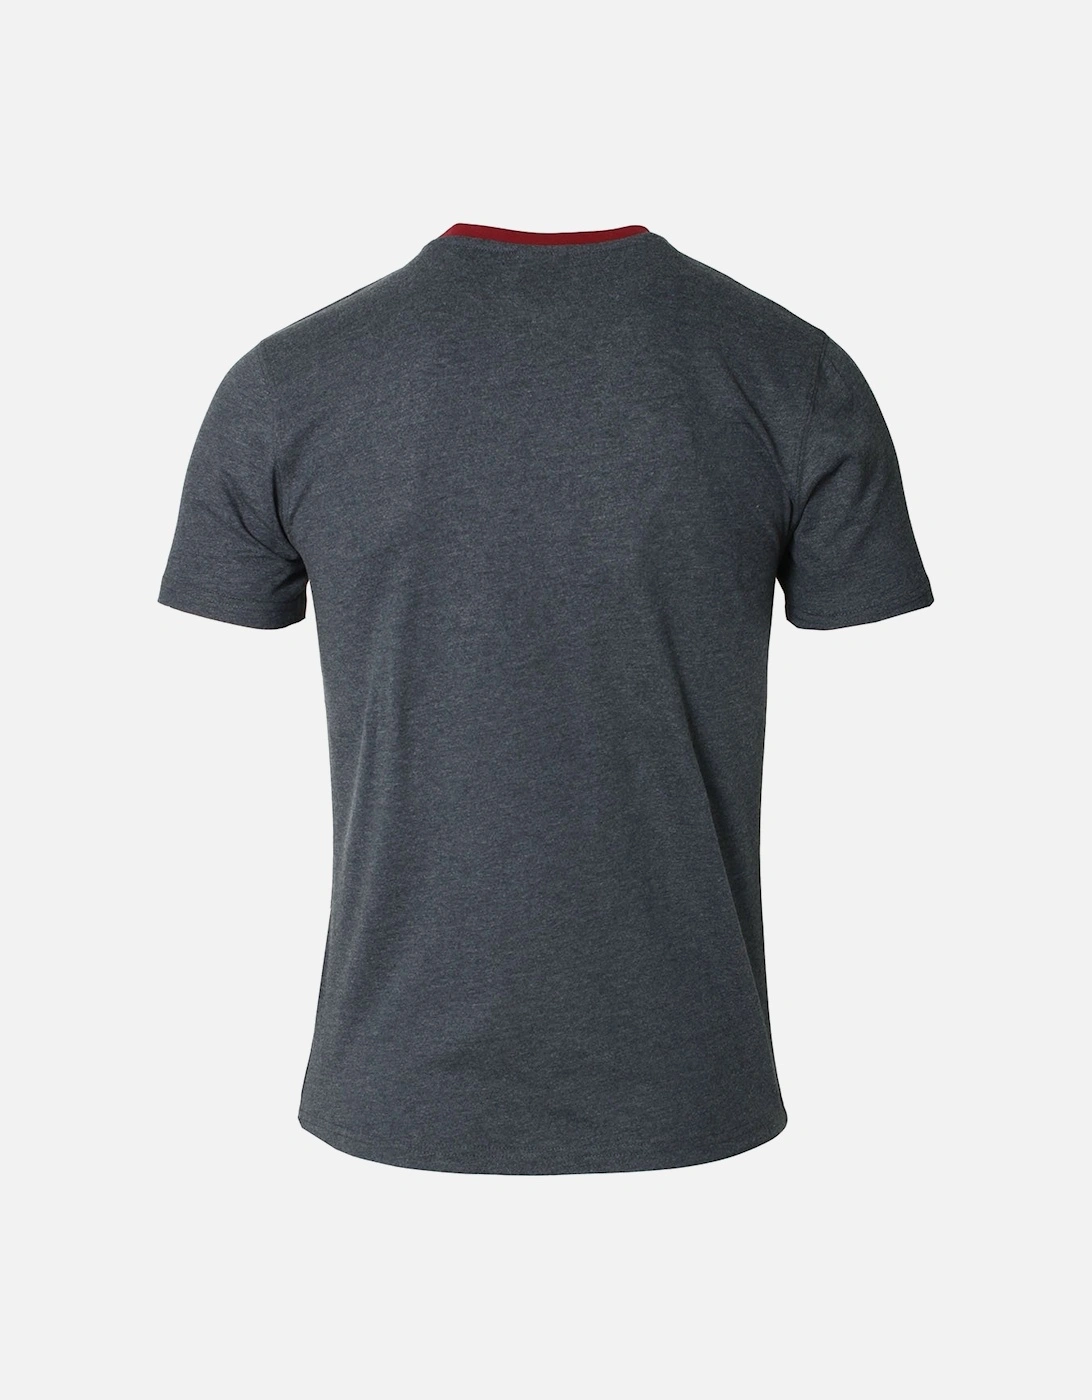 Shane T-Shirt | Eclipse Navy